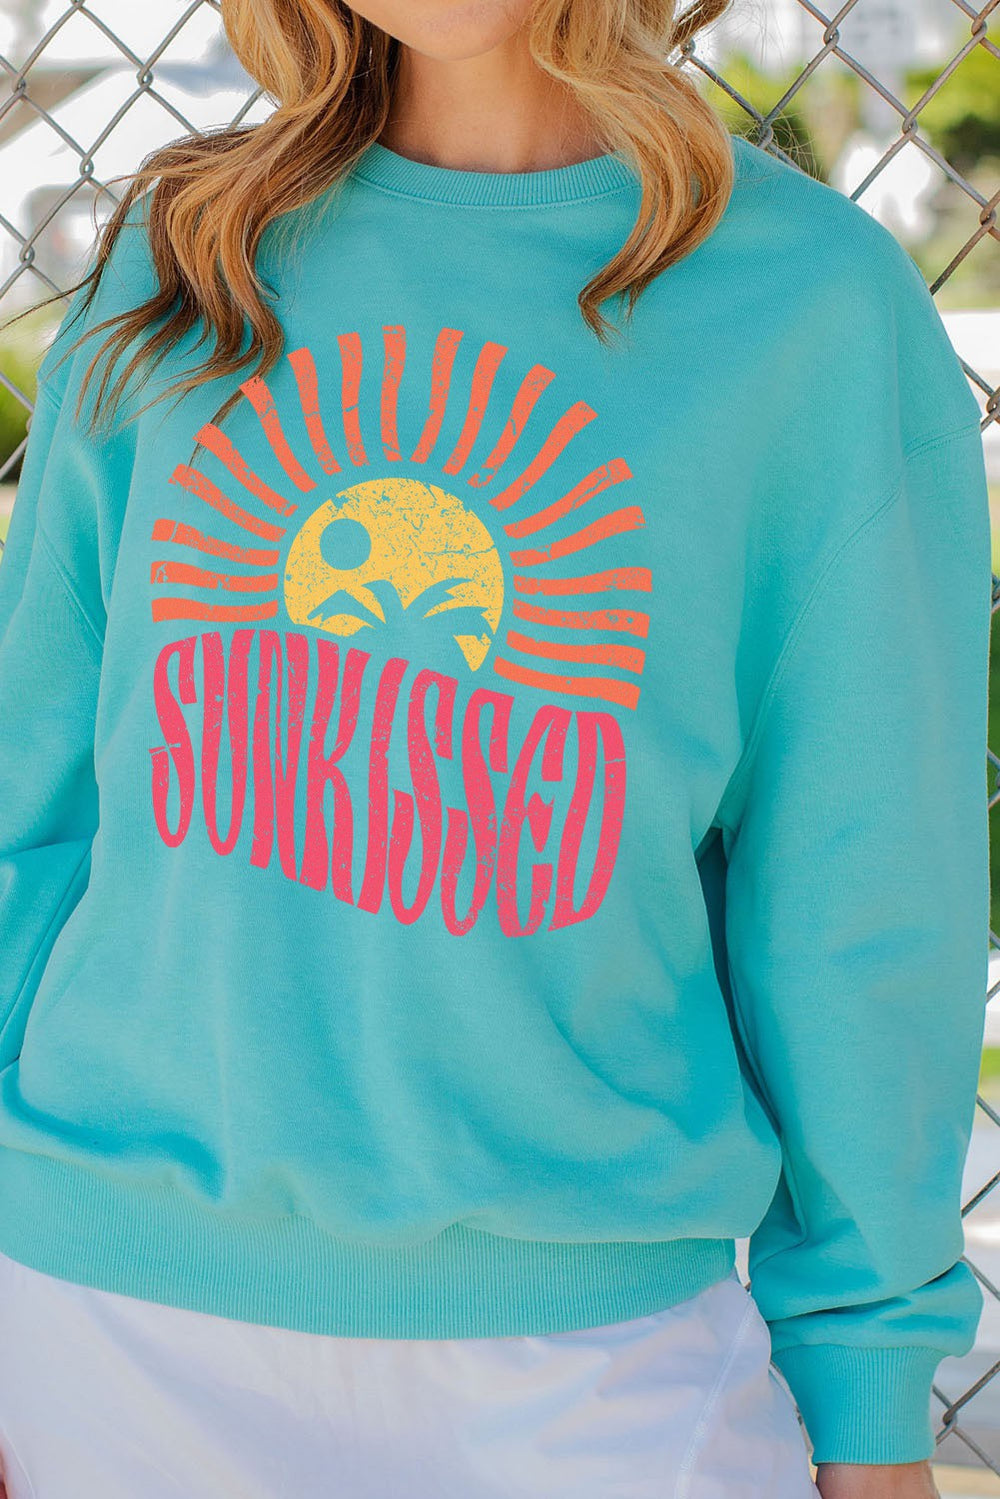 Sun Kissed Graphic Print Sweatshirt Pullover Top